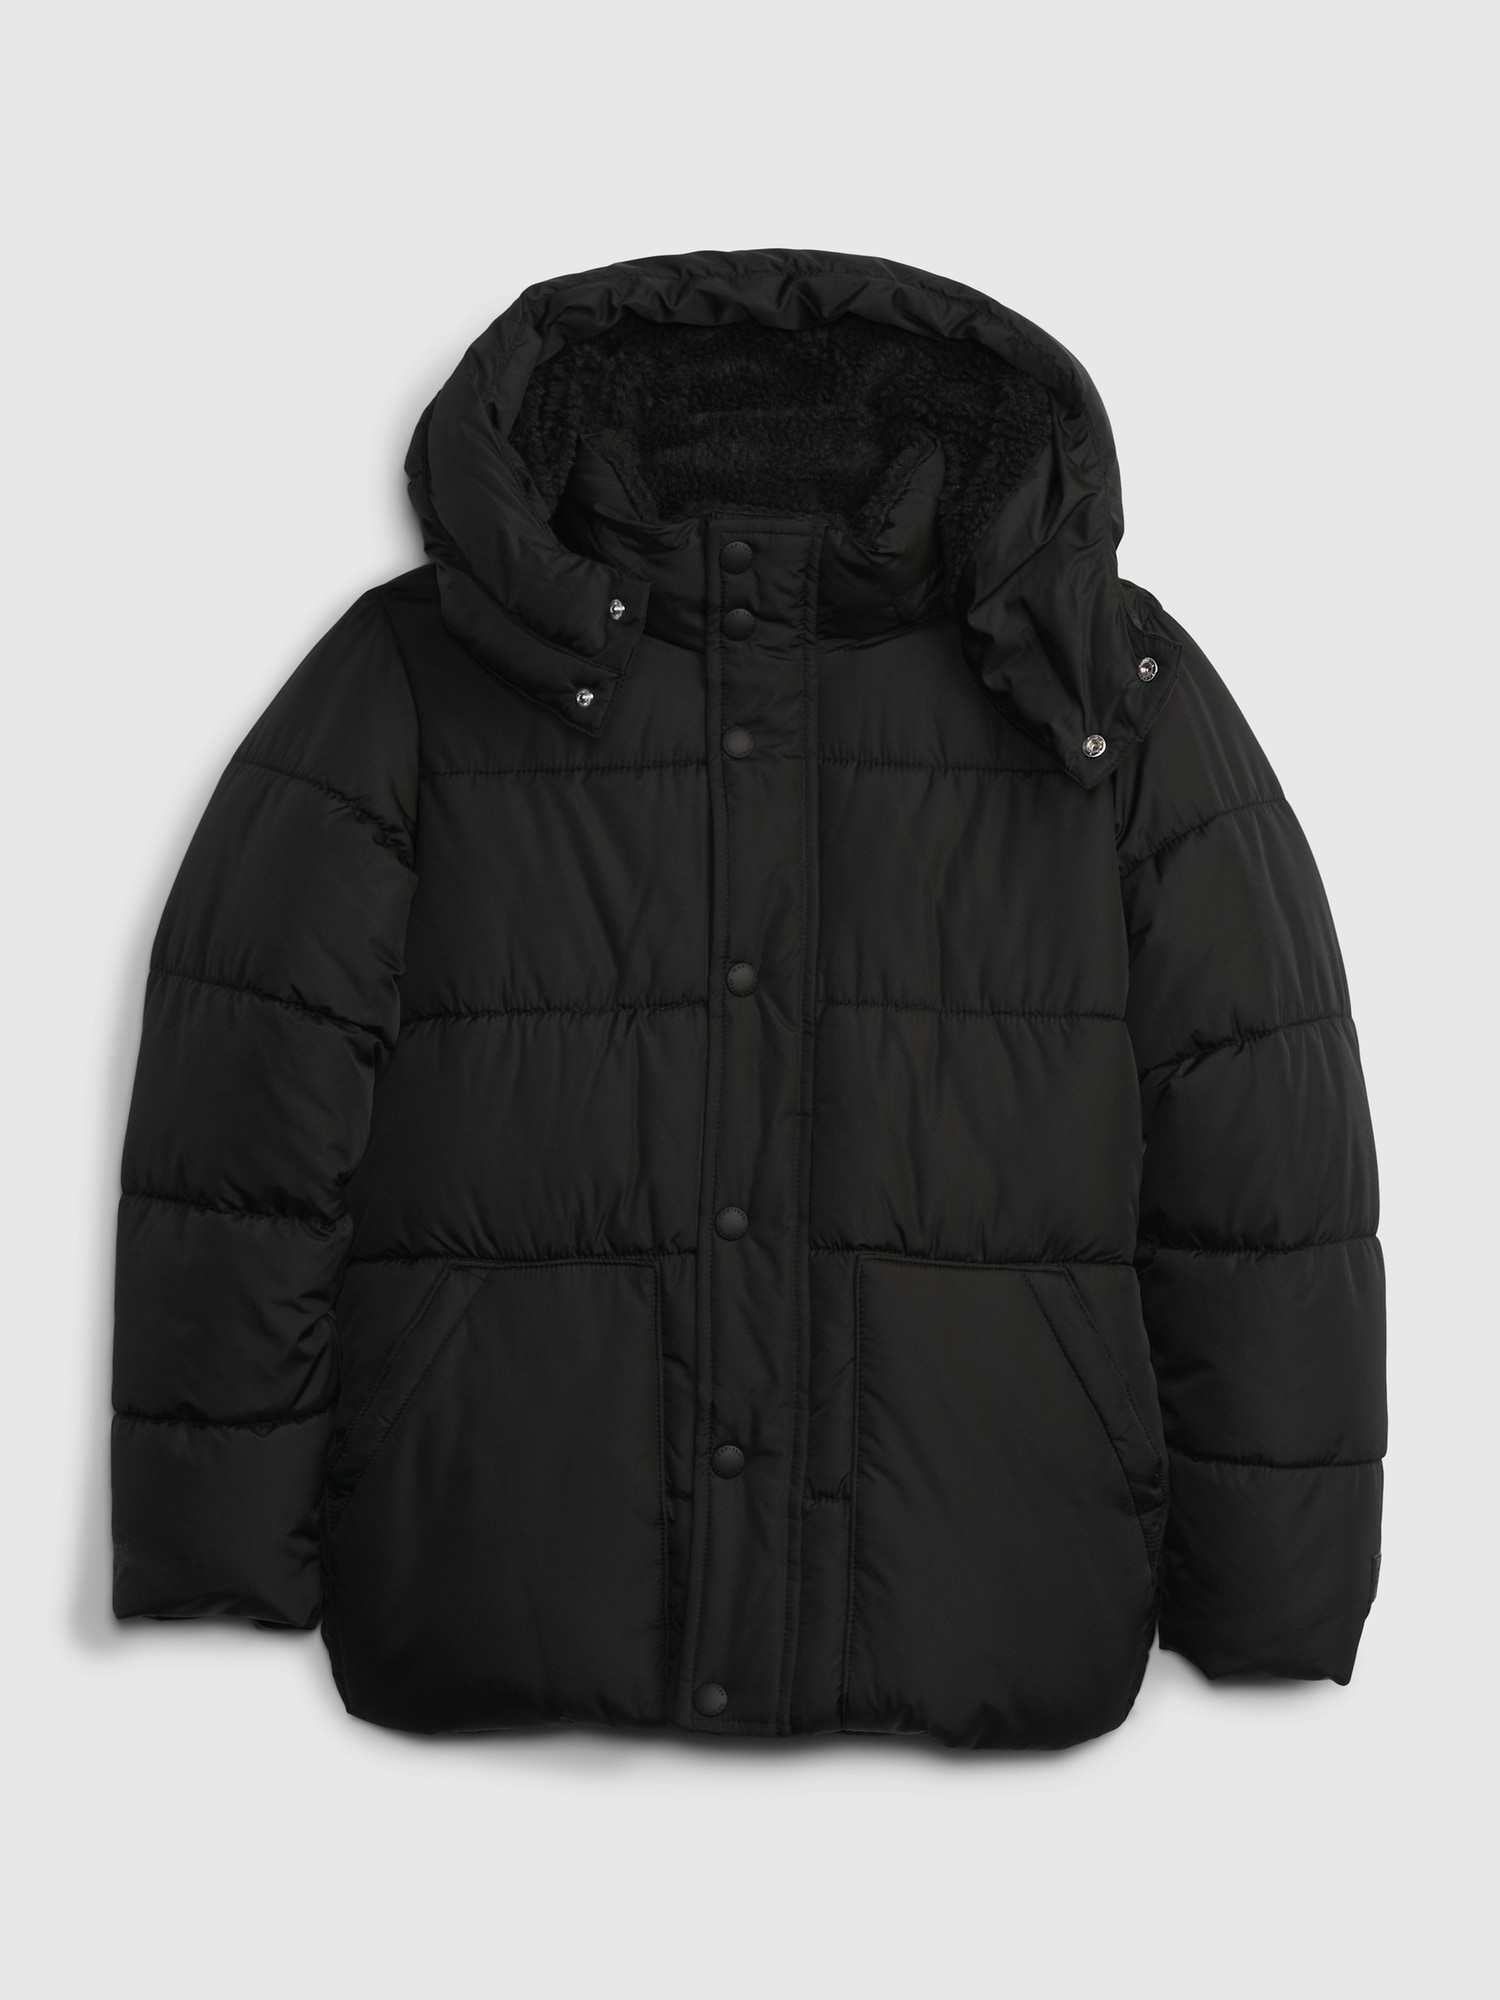 Kids Sherpa-Lined Puffer Jacket | Gap